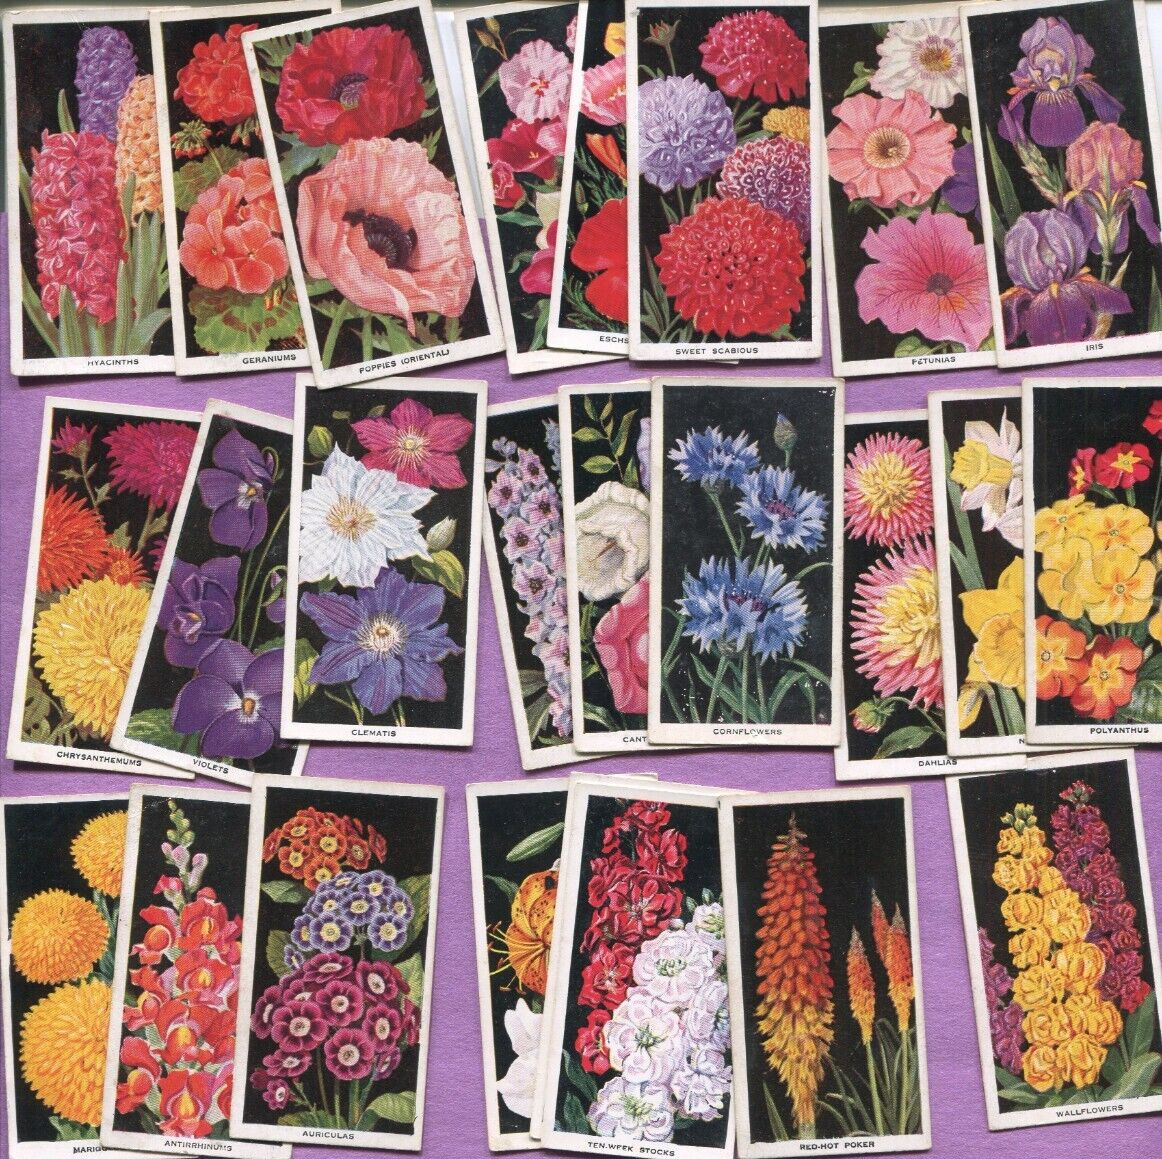 1936 CARRERAS LTD CIGARETTE FLOWERS AMATEUR GARDENING 25 DIFFERENT TOBACCO CARDS